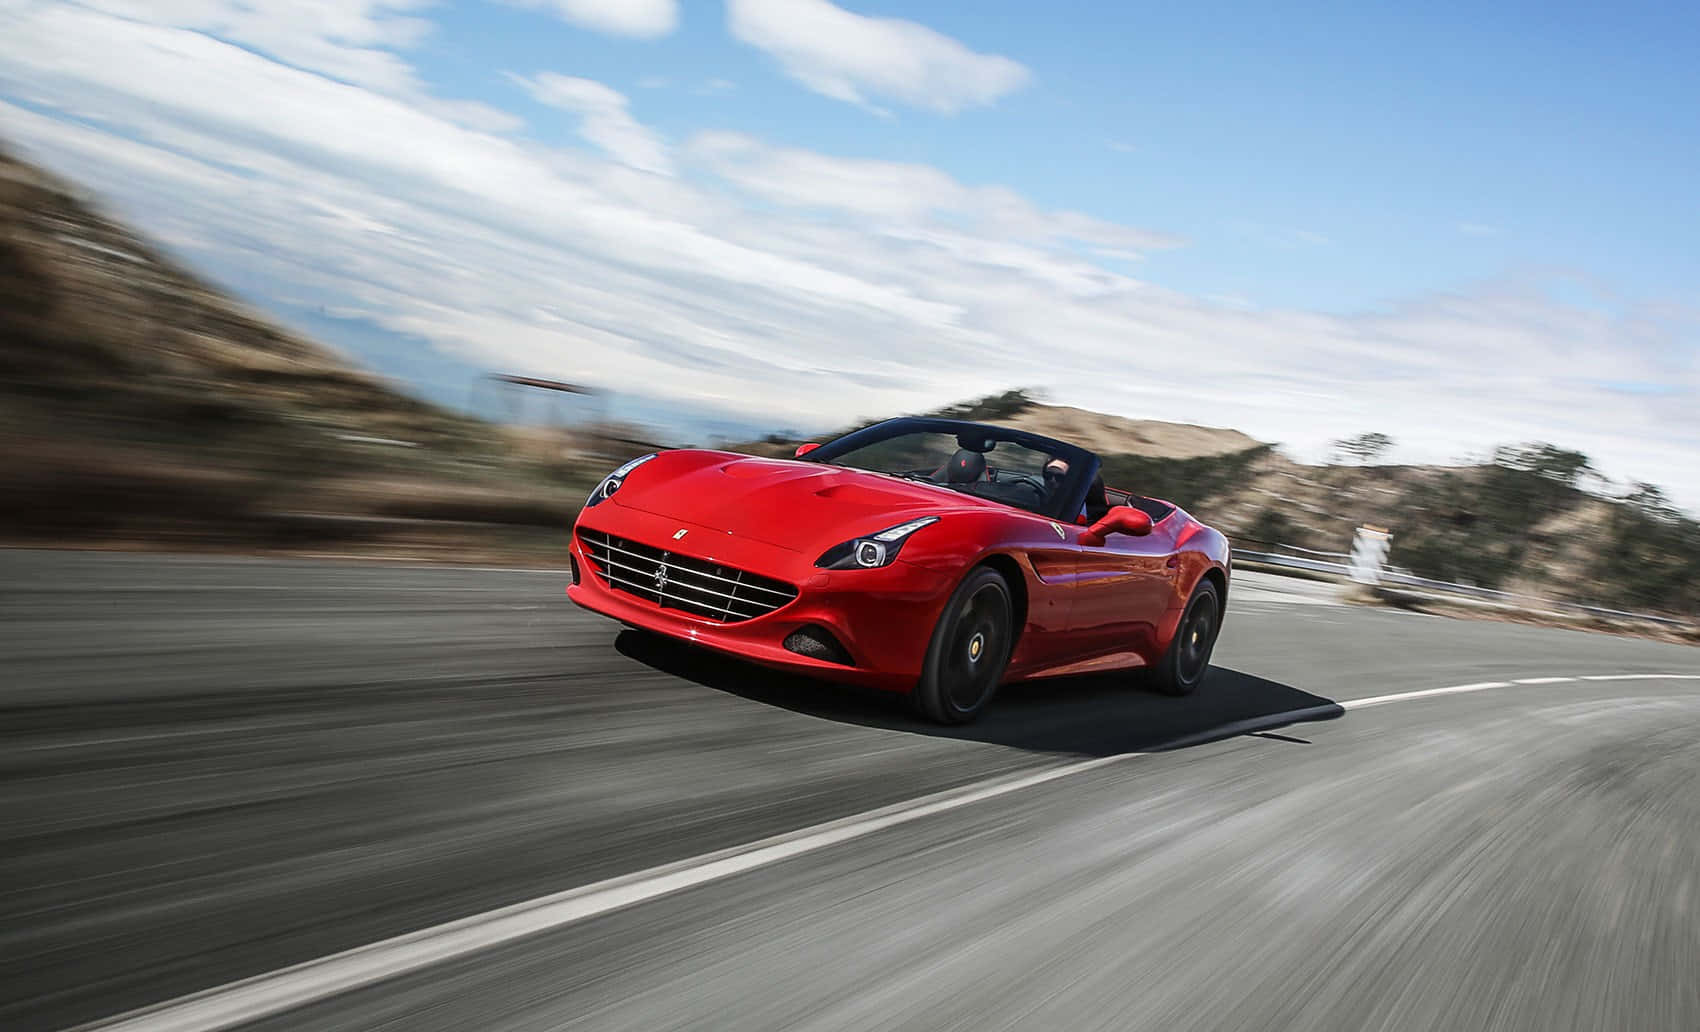 Caption: Stunning Red Ferrari California T in Motion Wallpaper